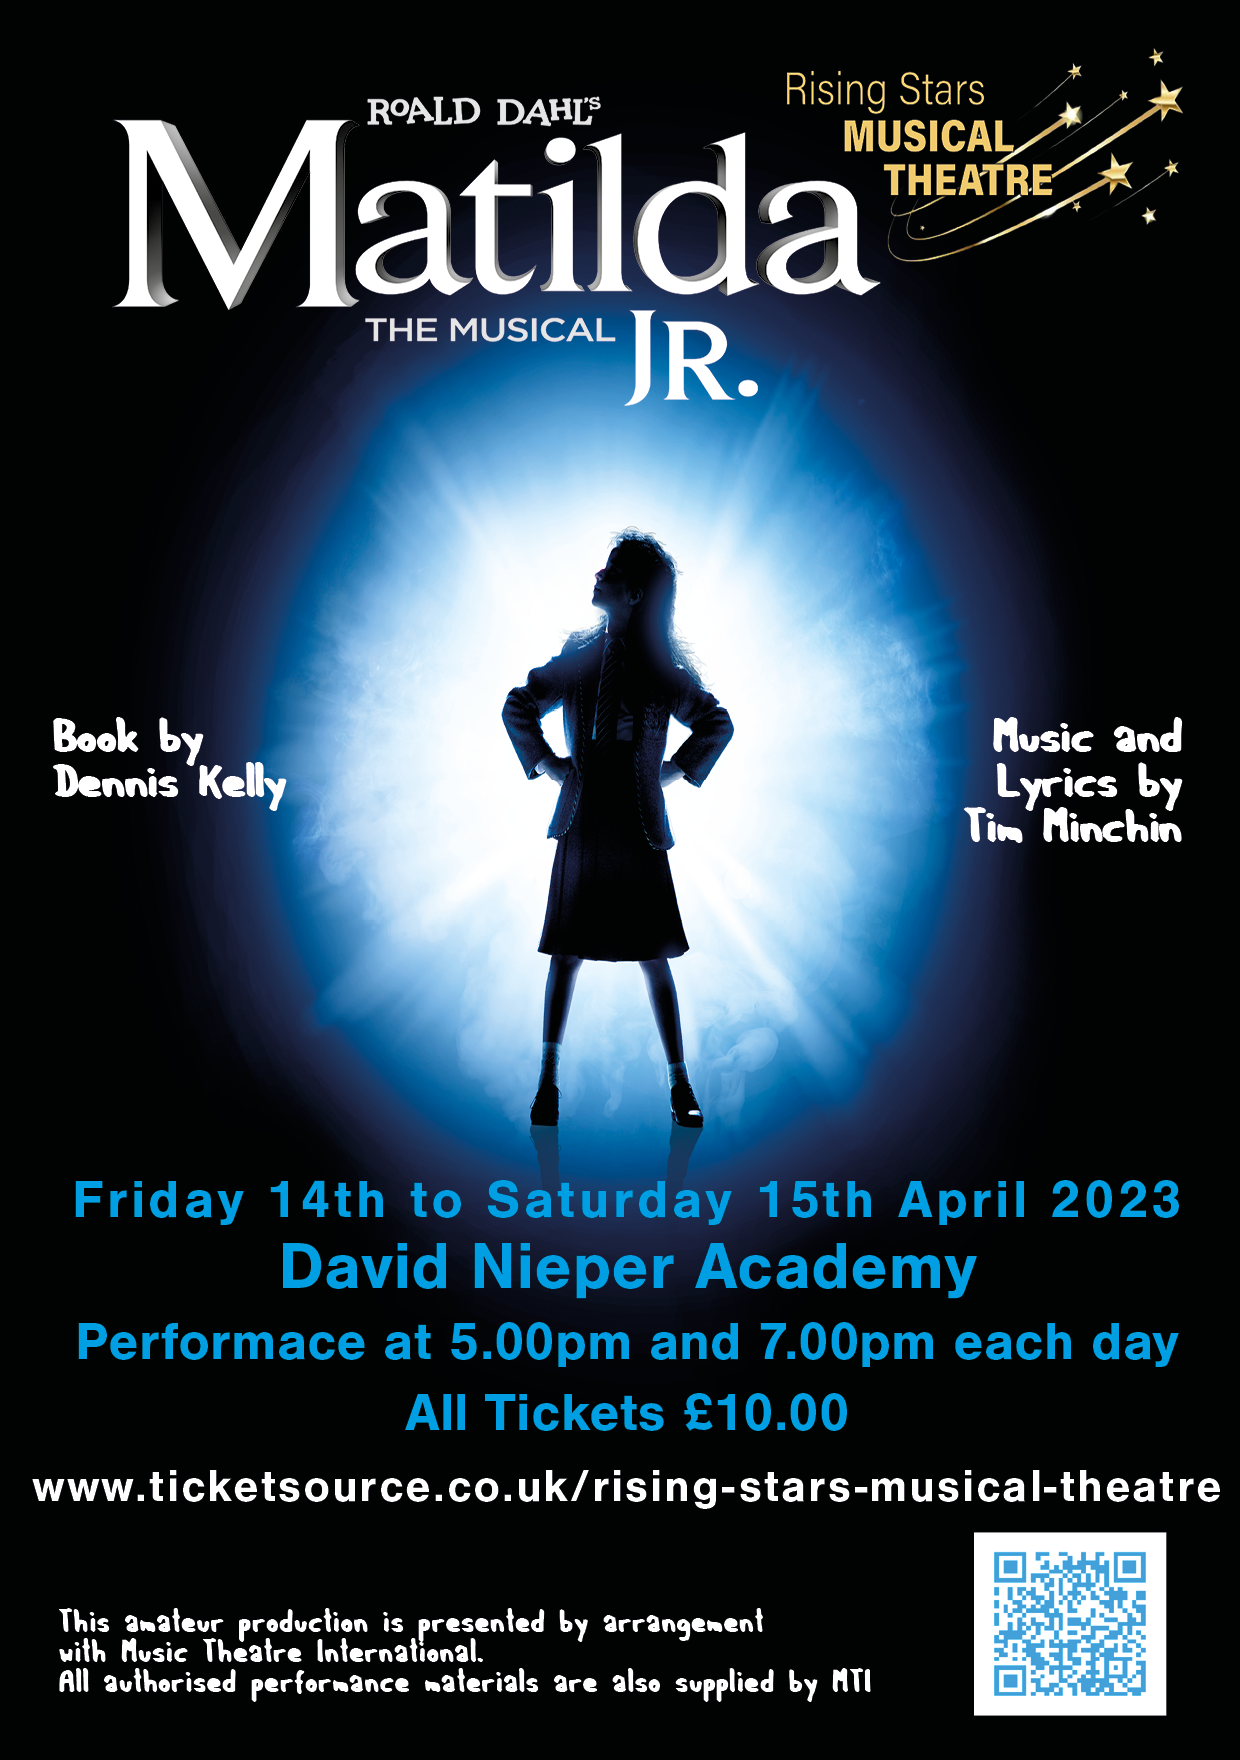 Rising Stars Musical Theatre will perform Matilda at the David Nieper Academy in Alfreton